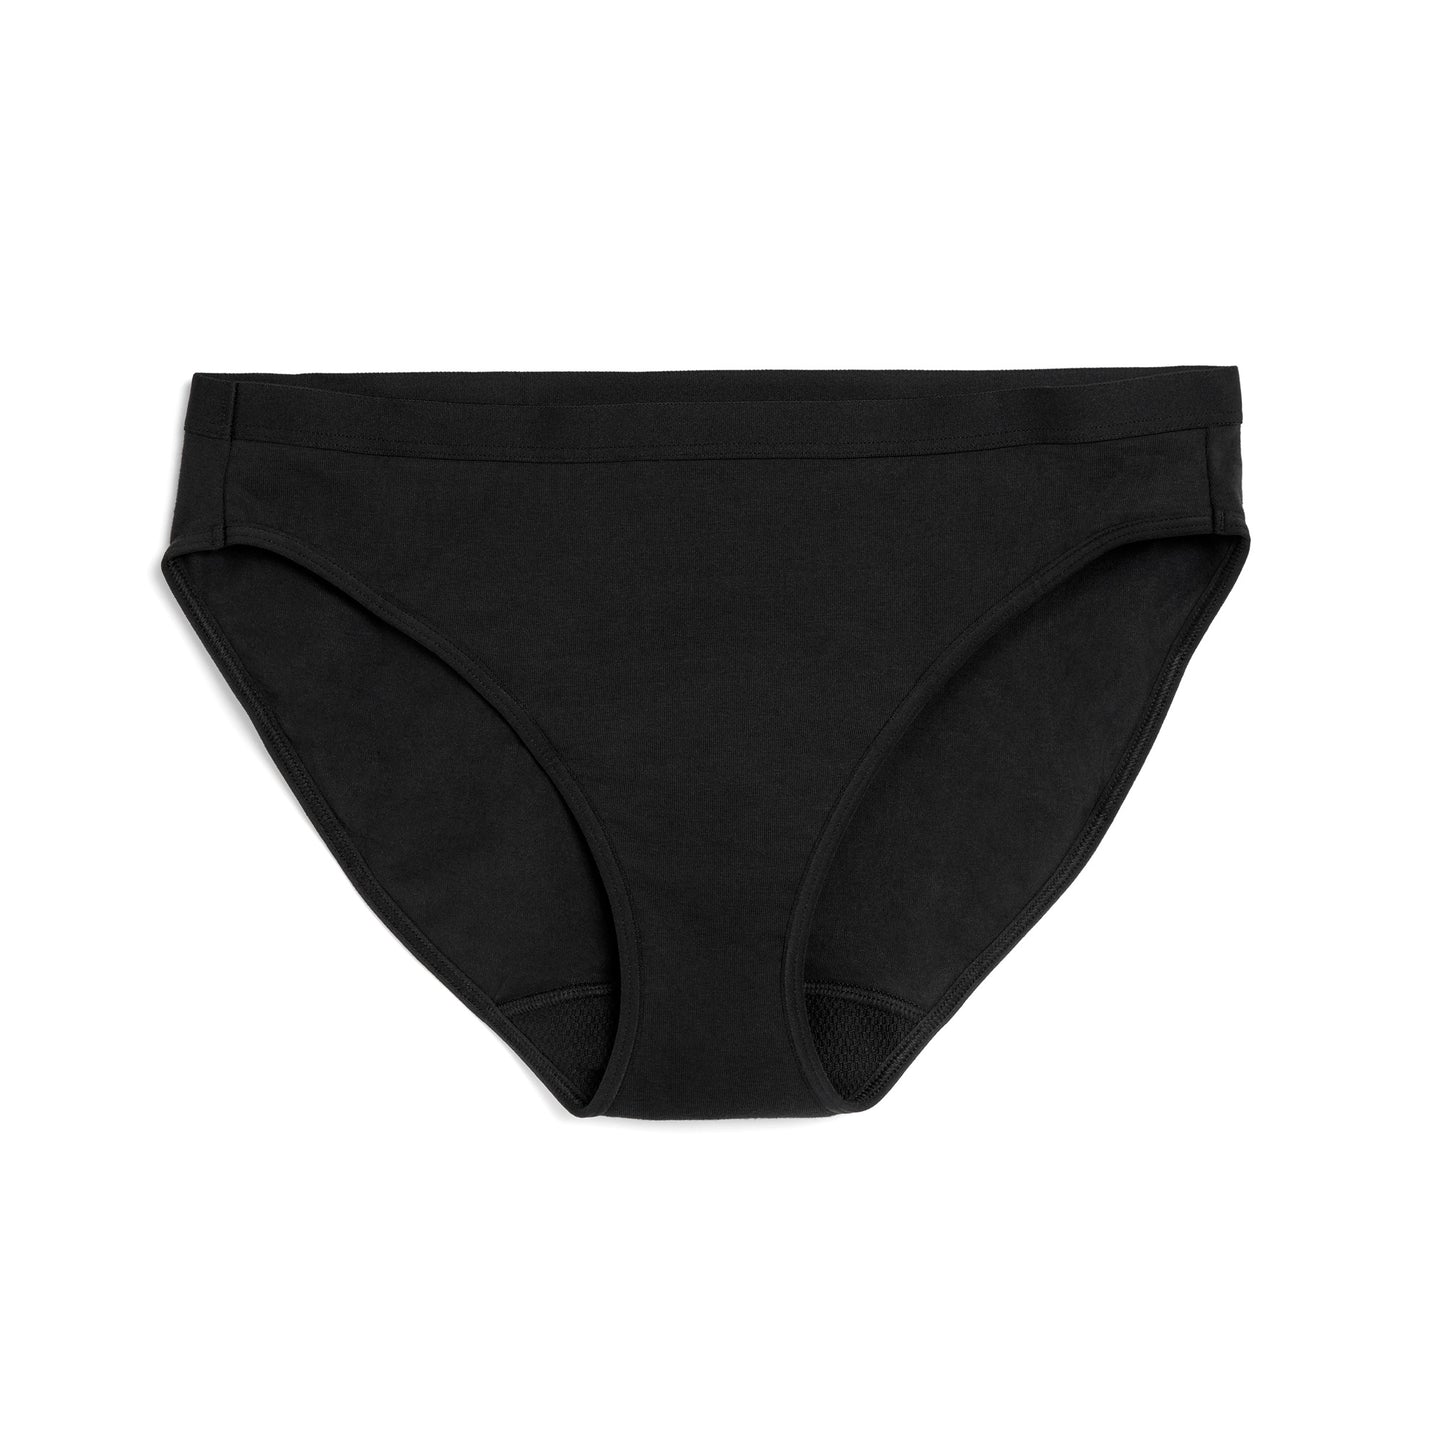  Mordlanka Teen Period Underwear Menstrual Panties for